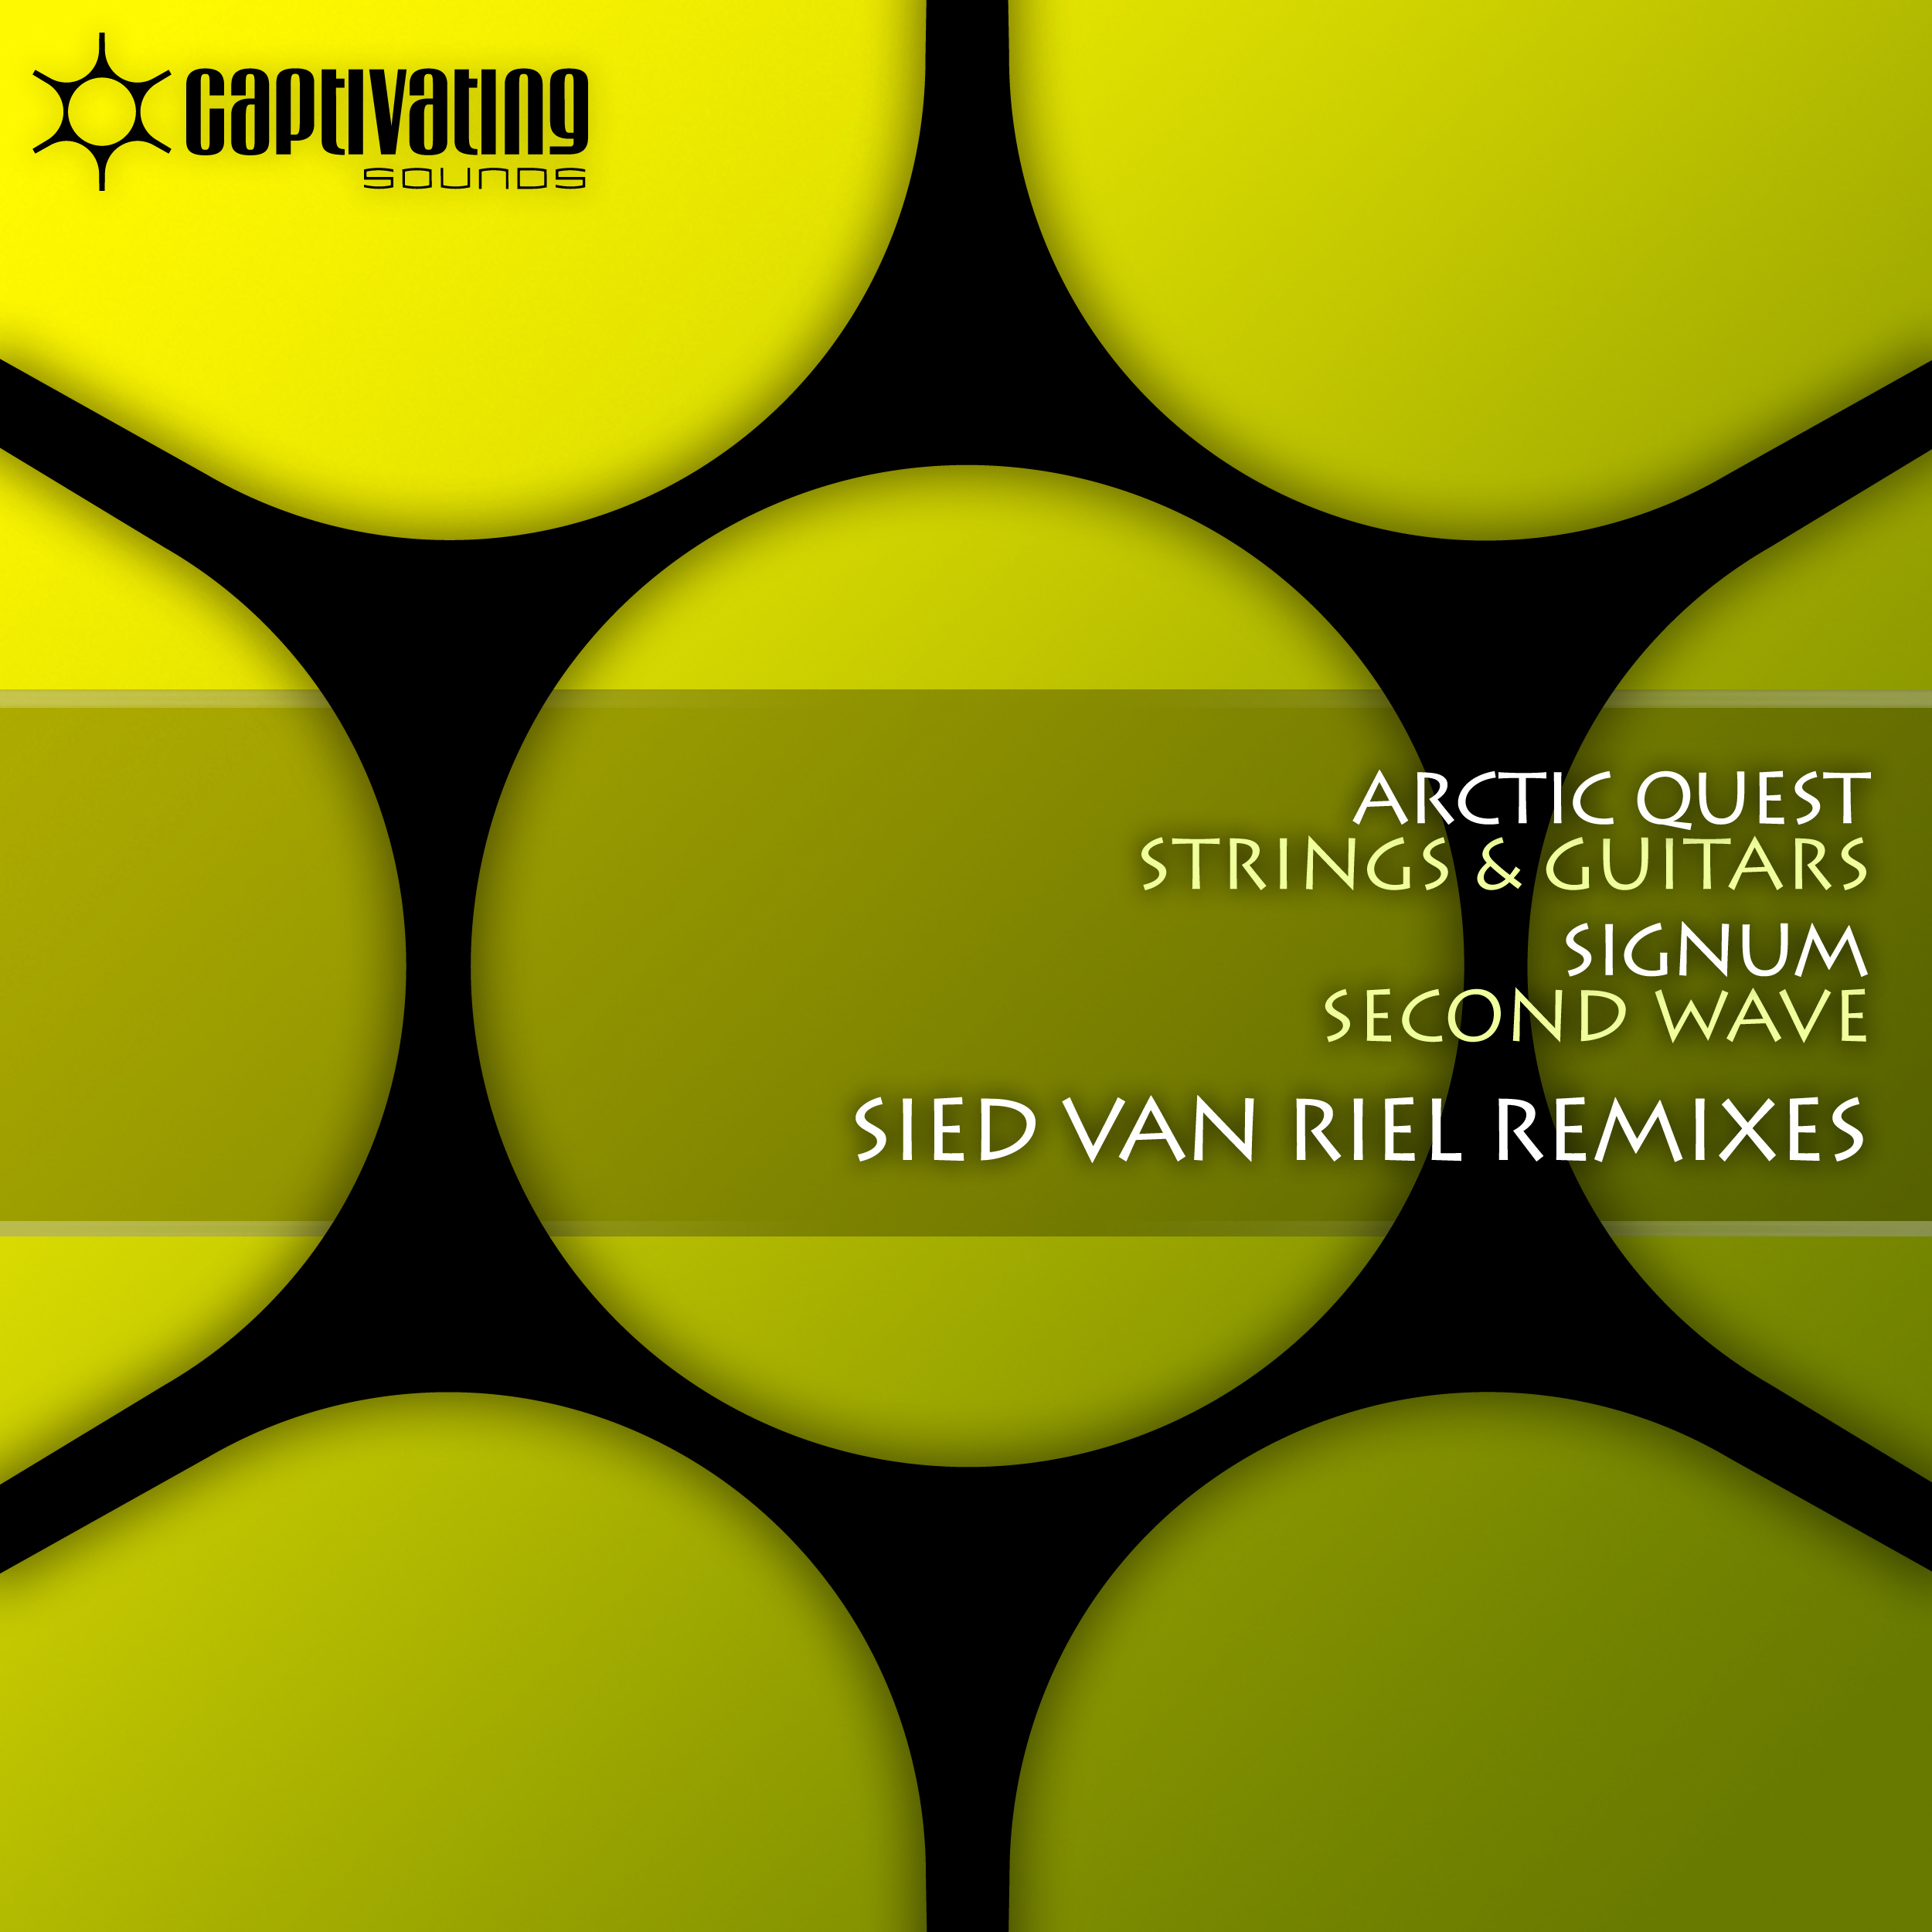 Strings & Guitars / Second Wave (Sied van Riel Remixes)